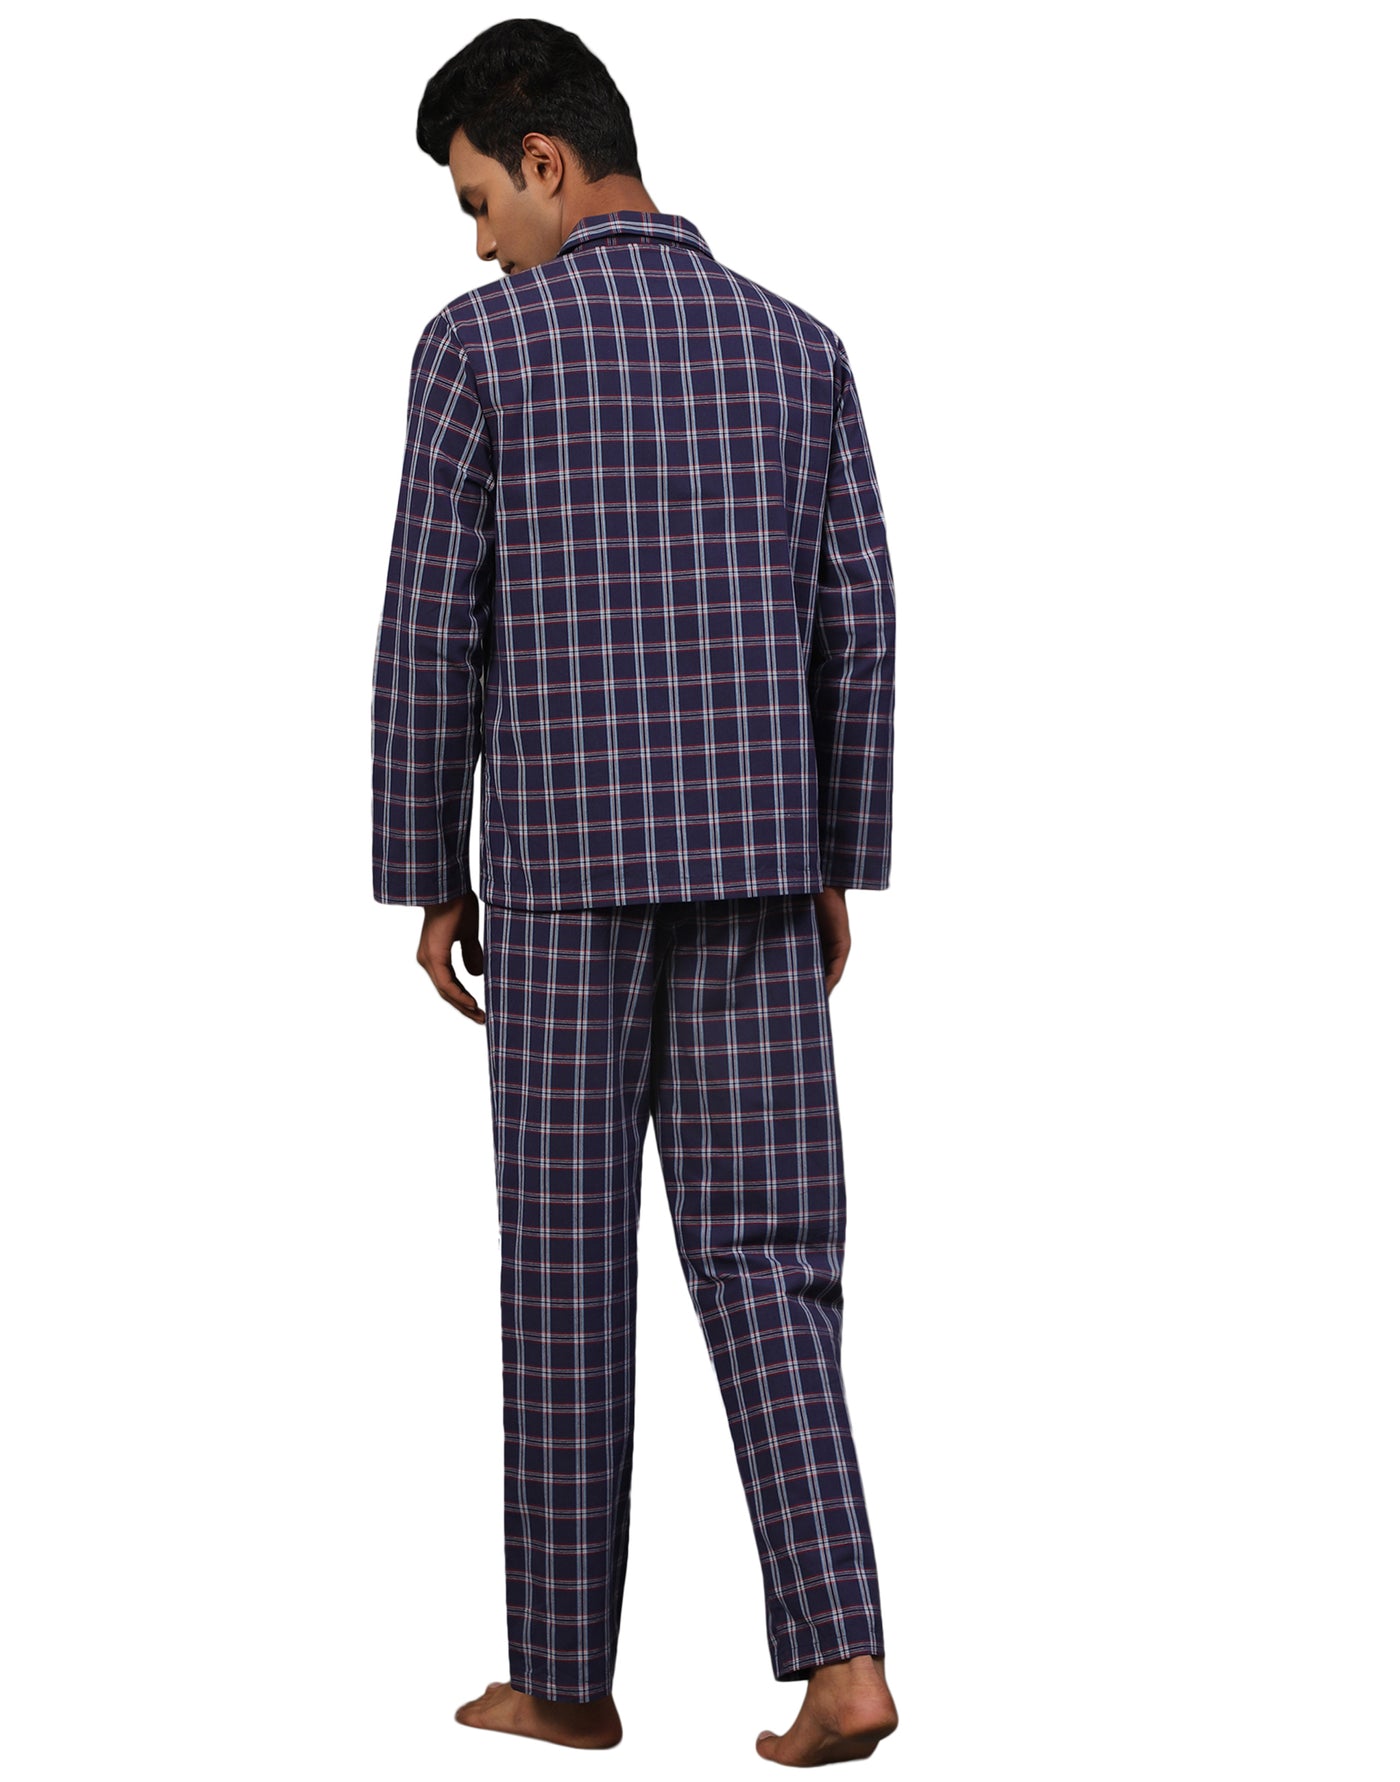 Pyjama Set for Men-Blue Tartan Checked